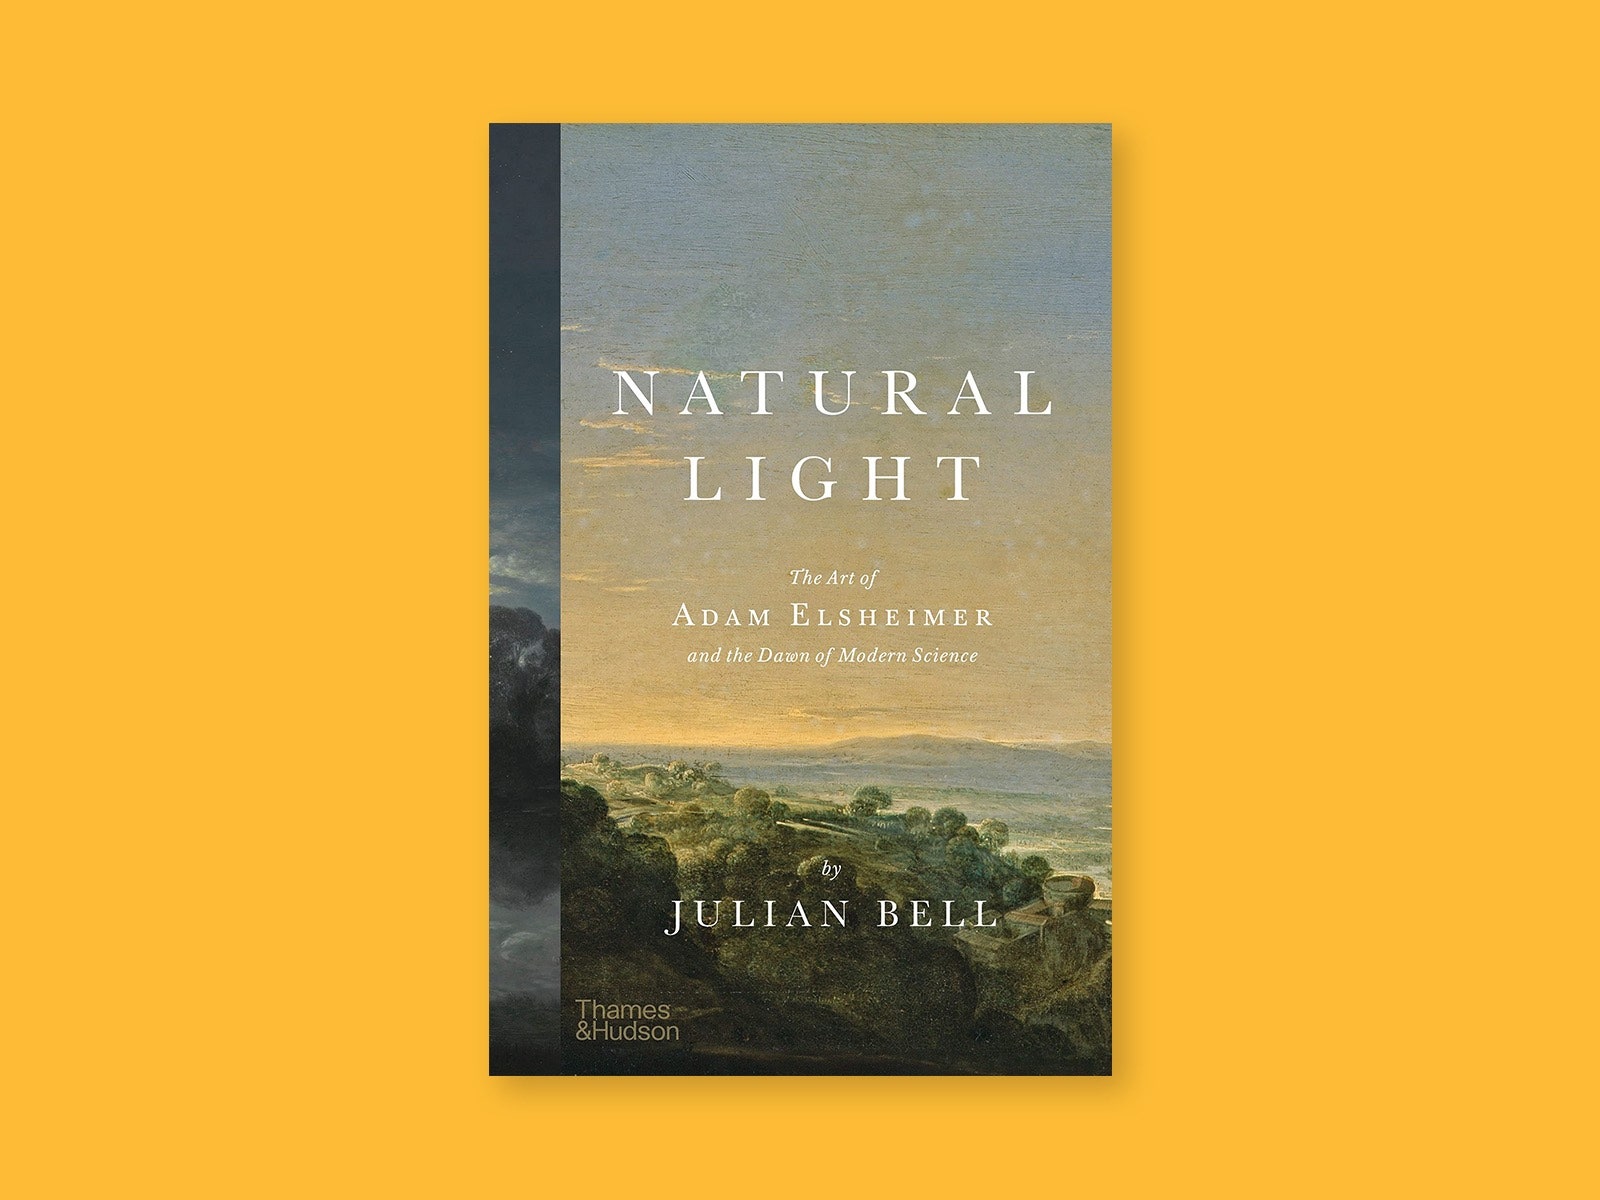 Das Cover des Buches „Natural Light“ von Julian Bell.